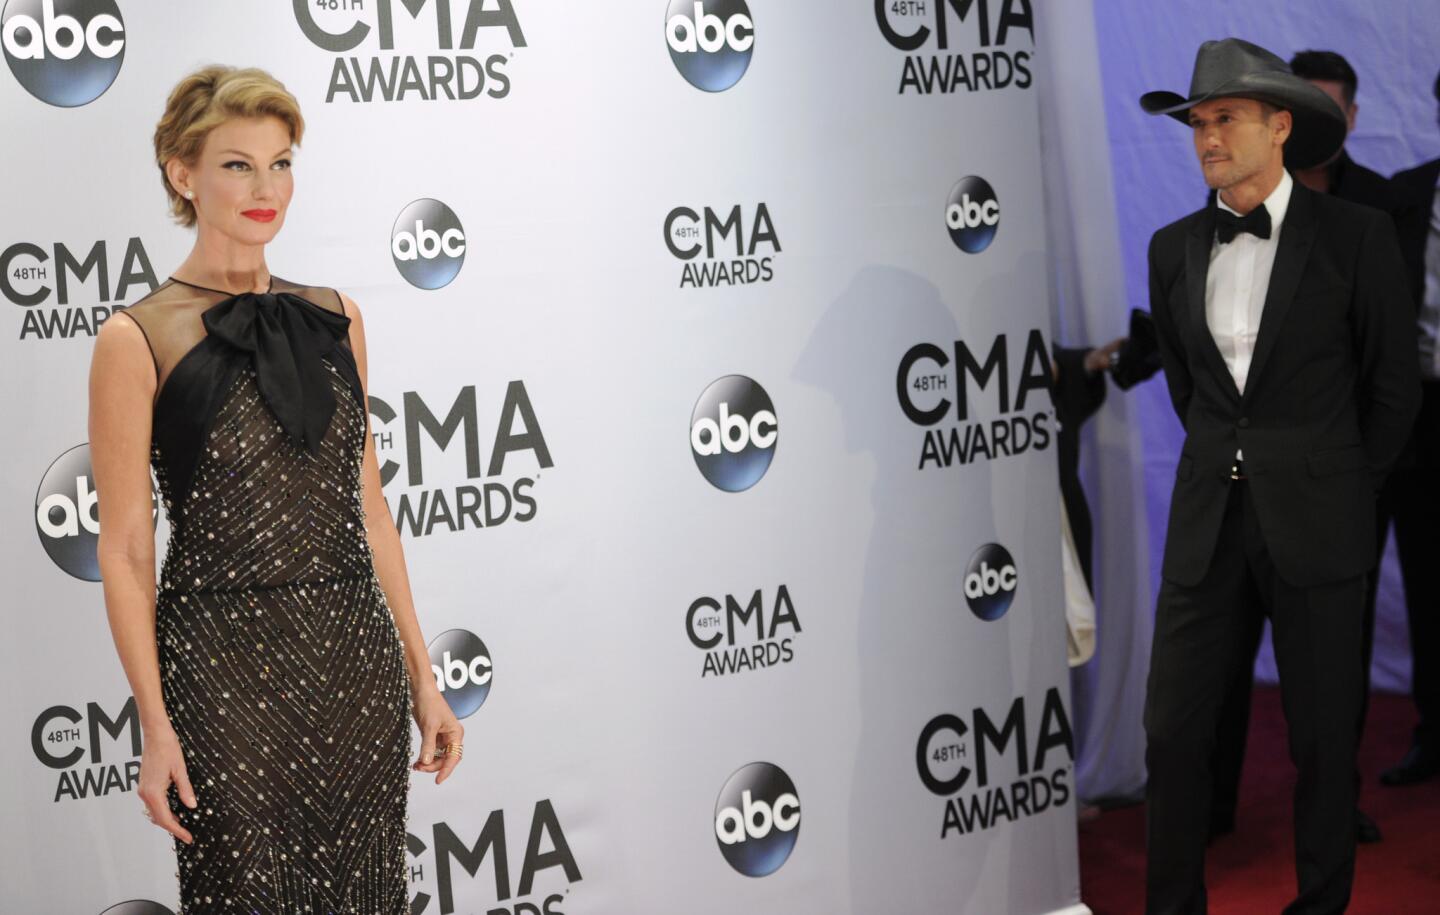 Faith Hill and Tim McGraw arrive at the 48th CMA Awards at the Bridgestone Arena in Nashville, Tenn.